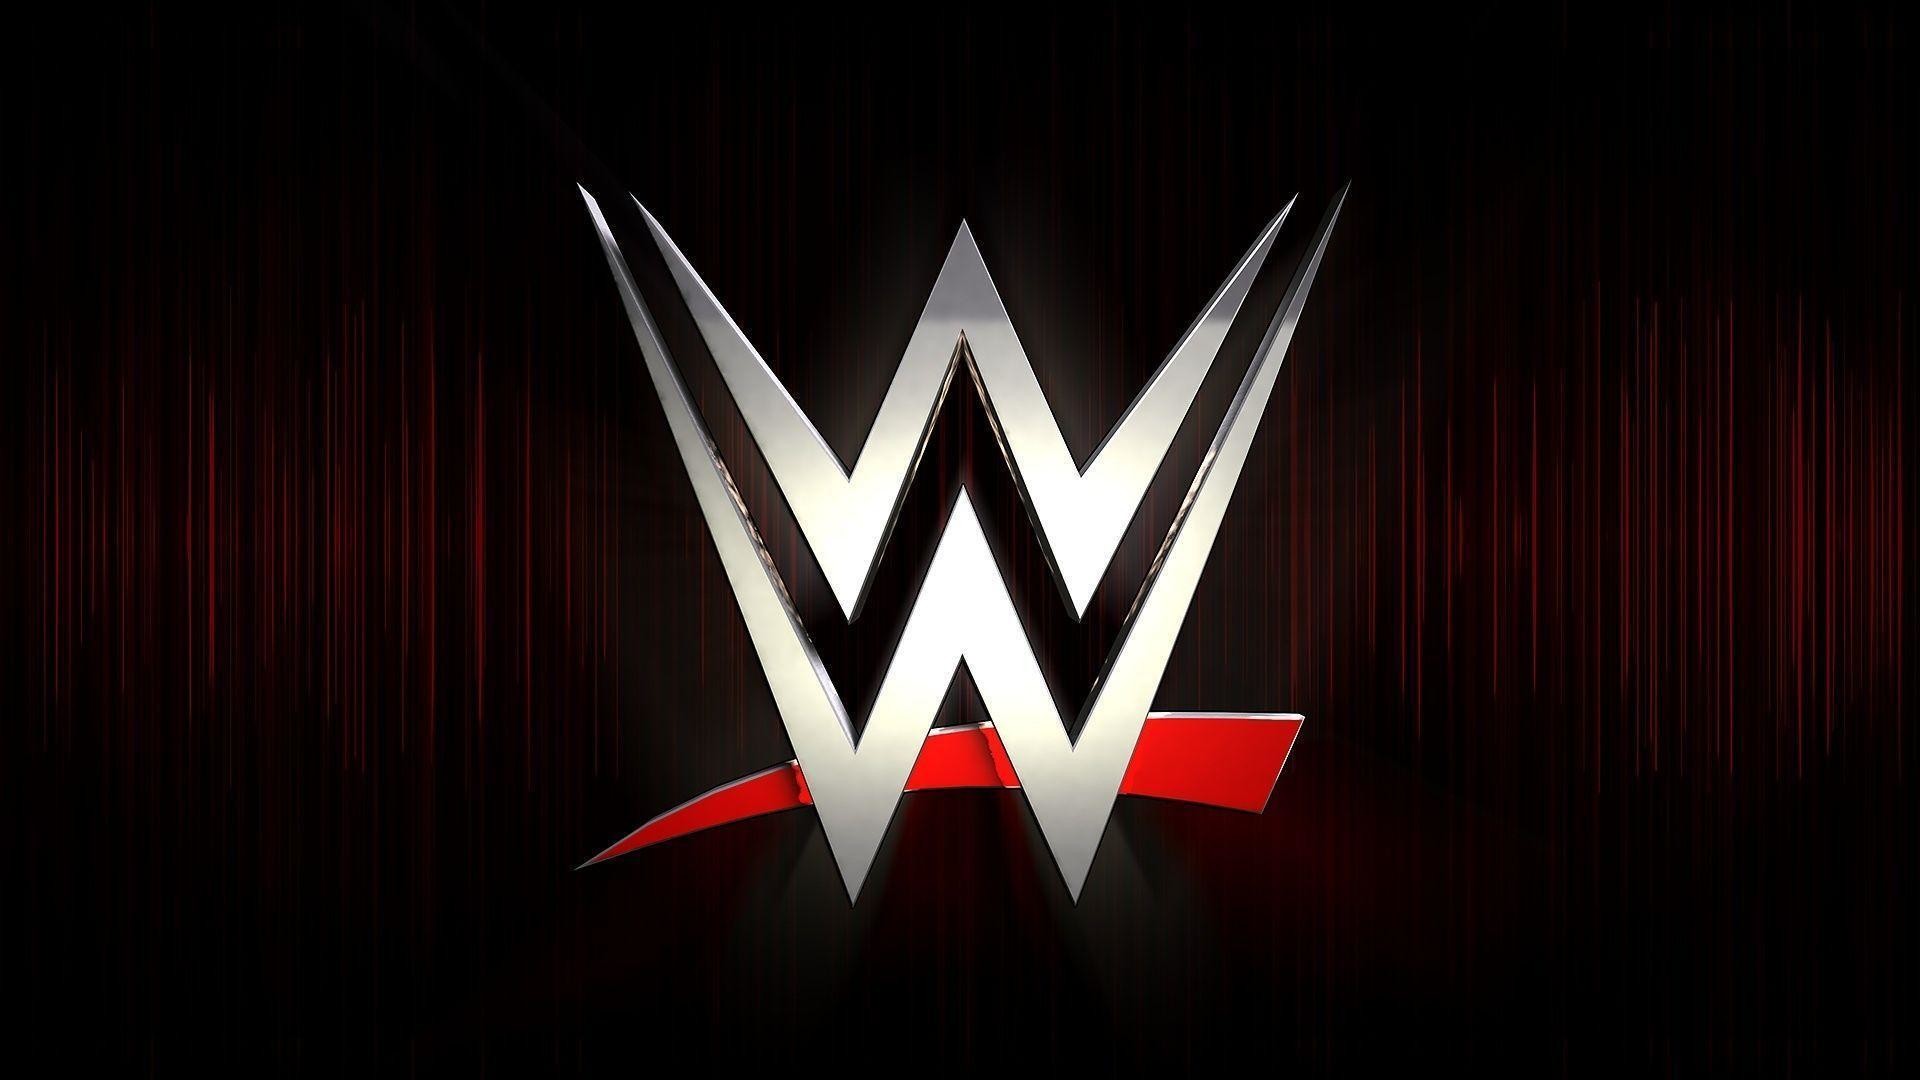 1920x1080  Wwe, Wrestling, Wrestling Logo, Wwe Logo Wallpapers and .